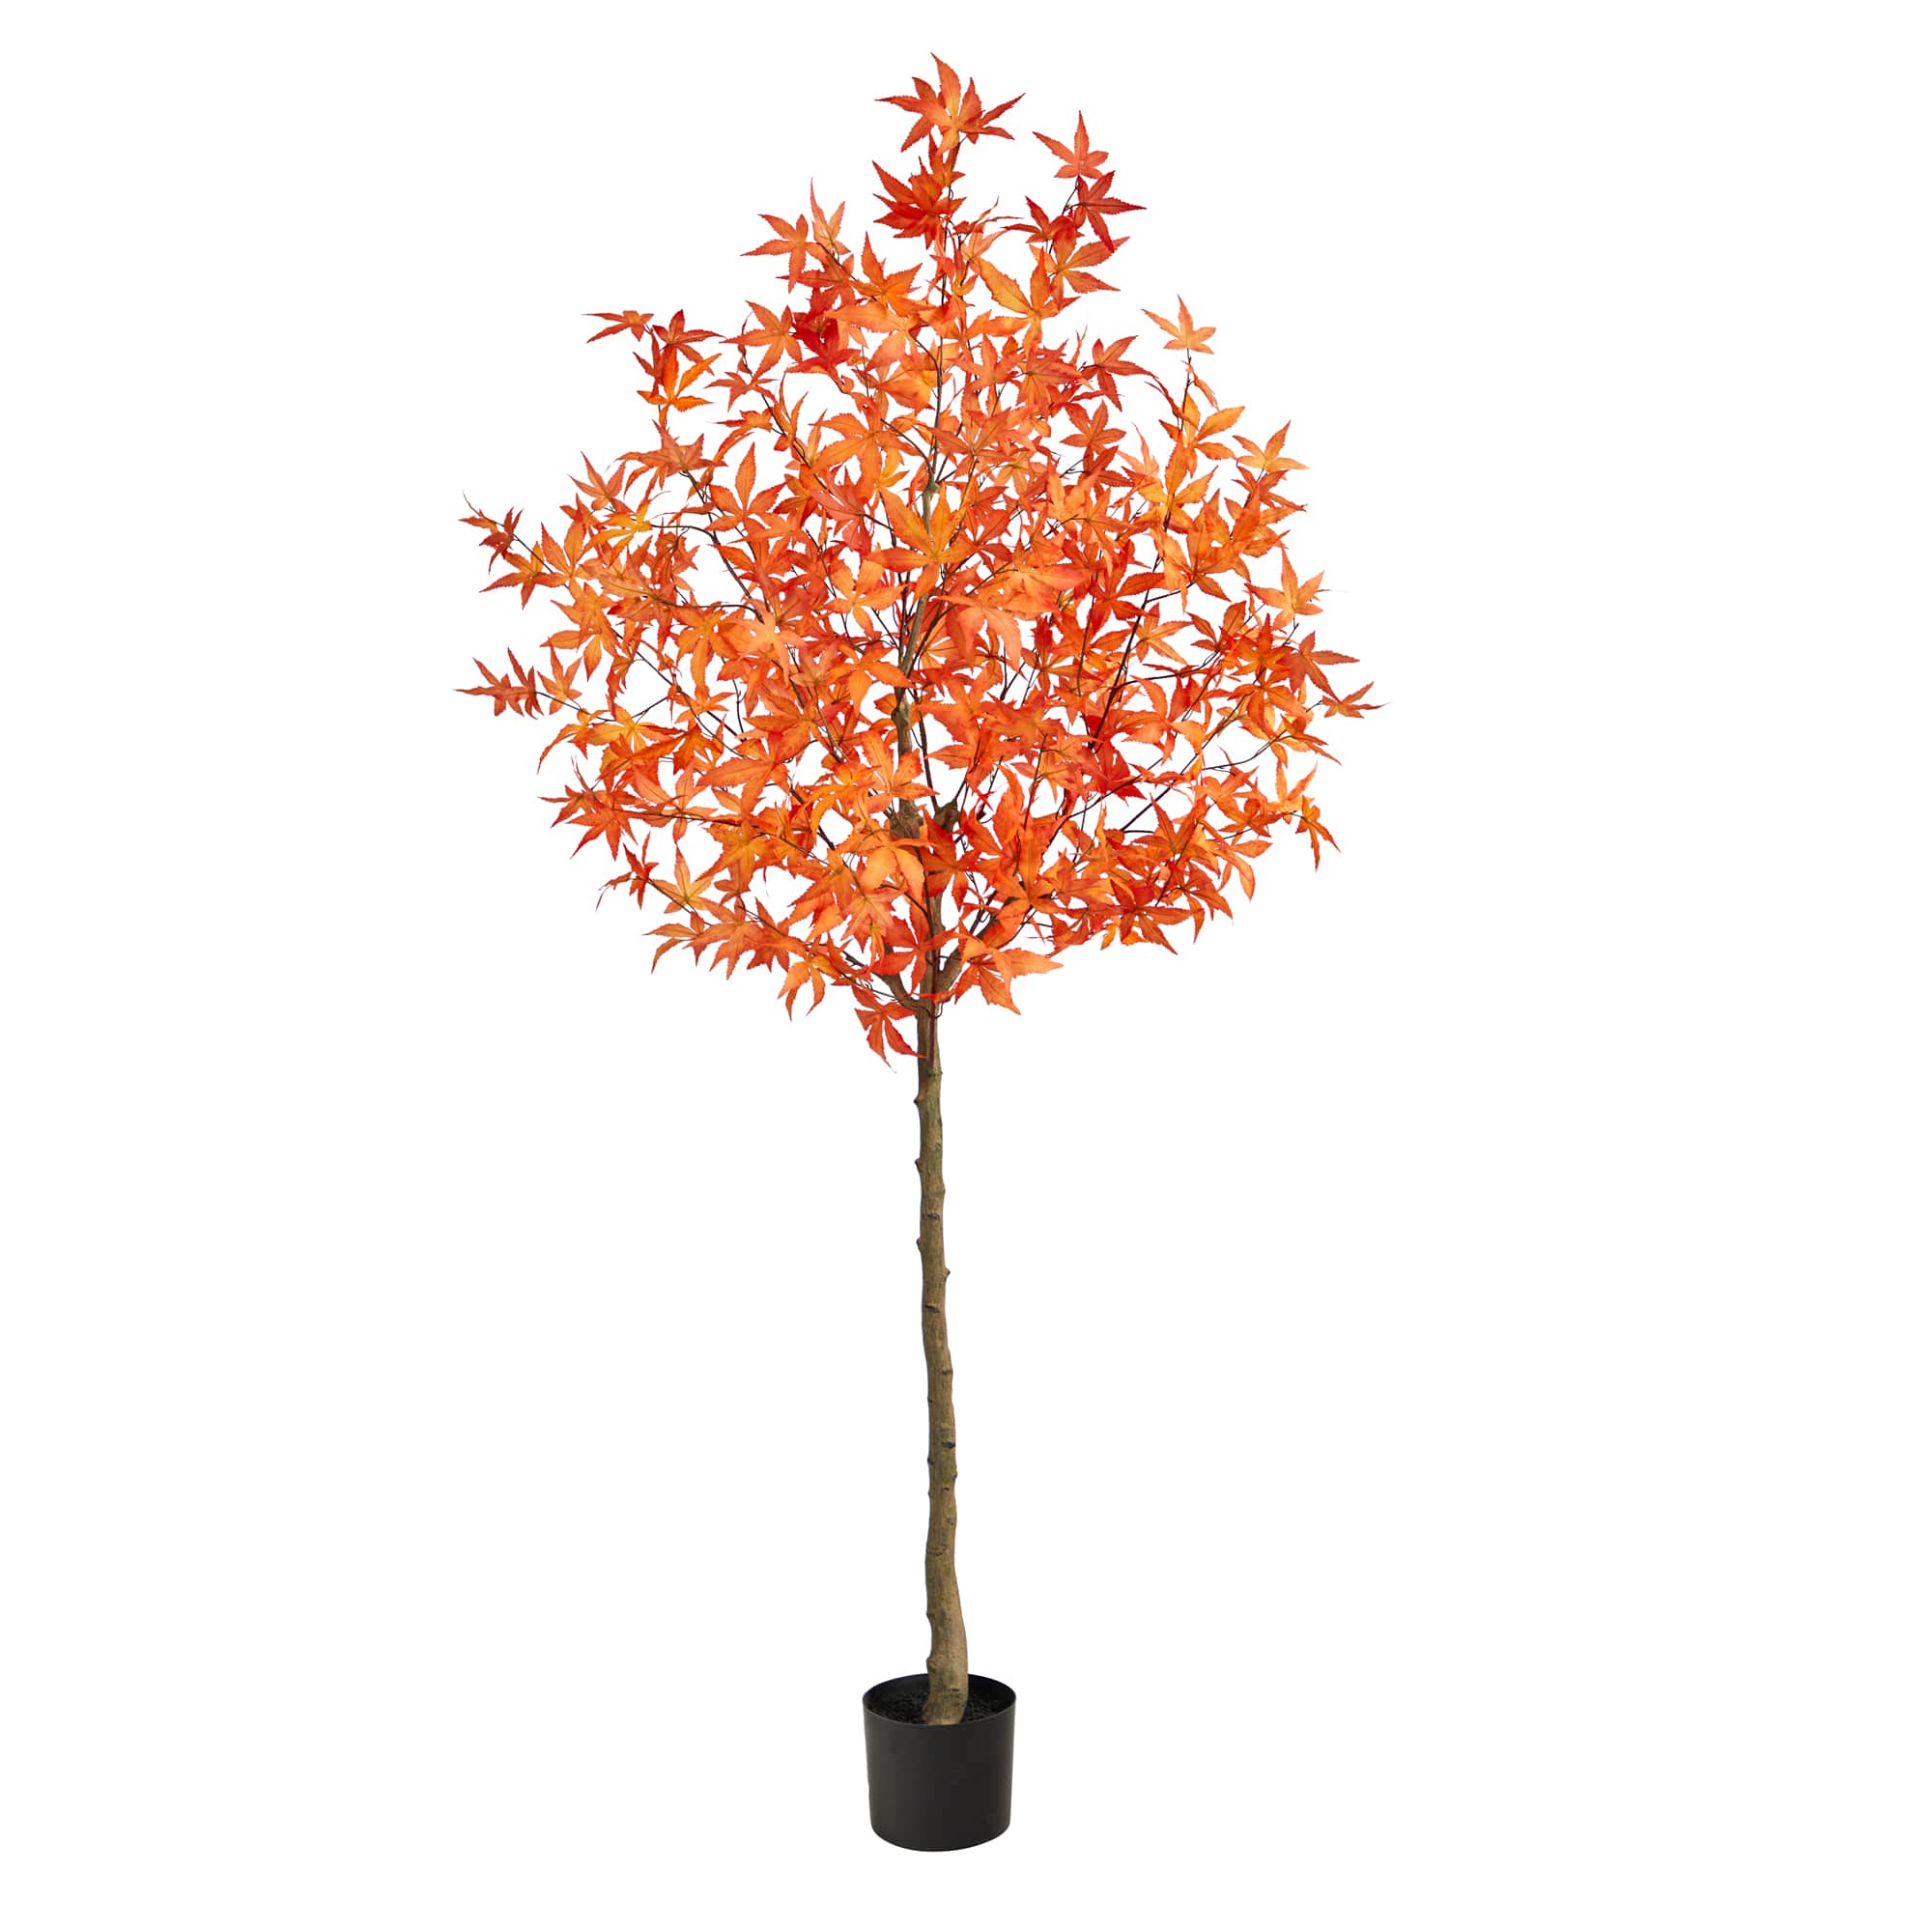 6ft. Potted Orange Autumn Maple Tree